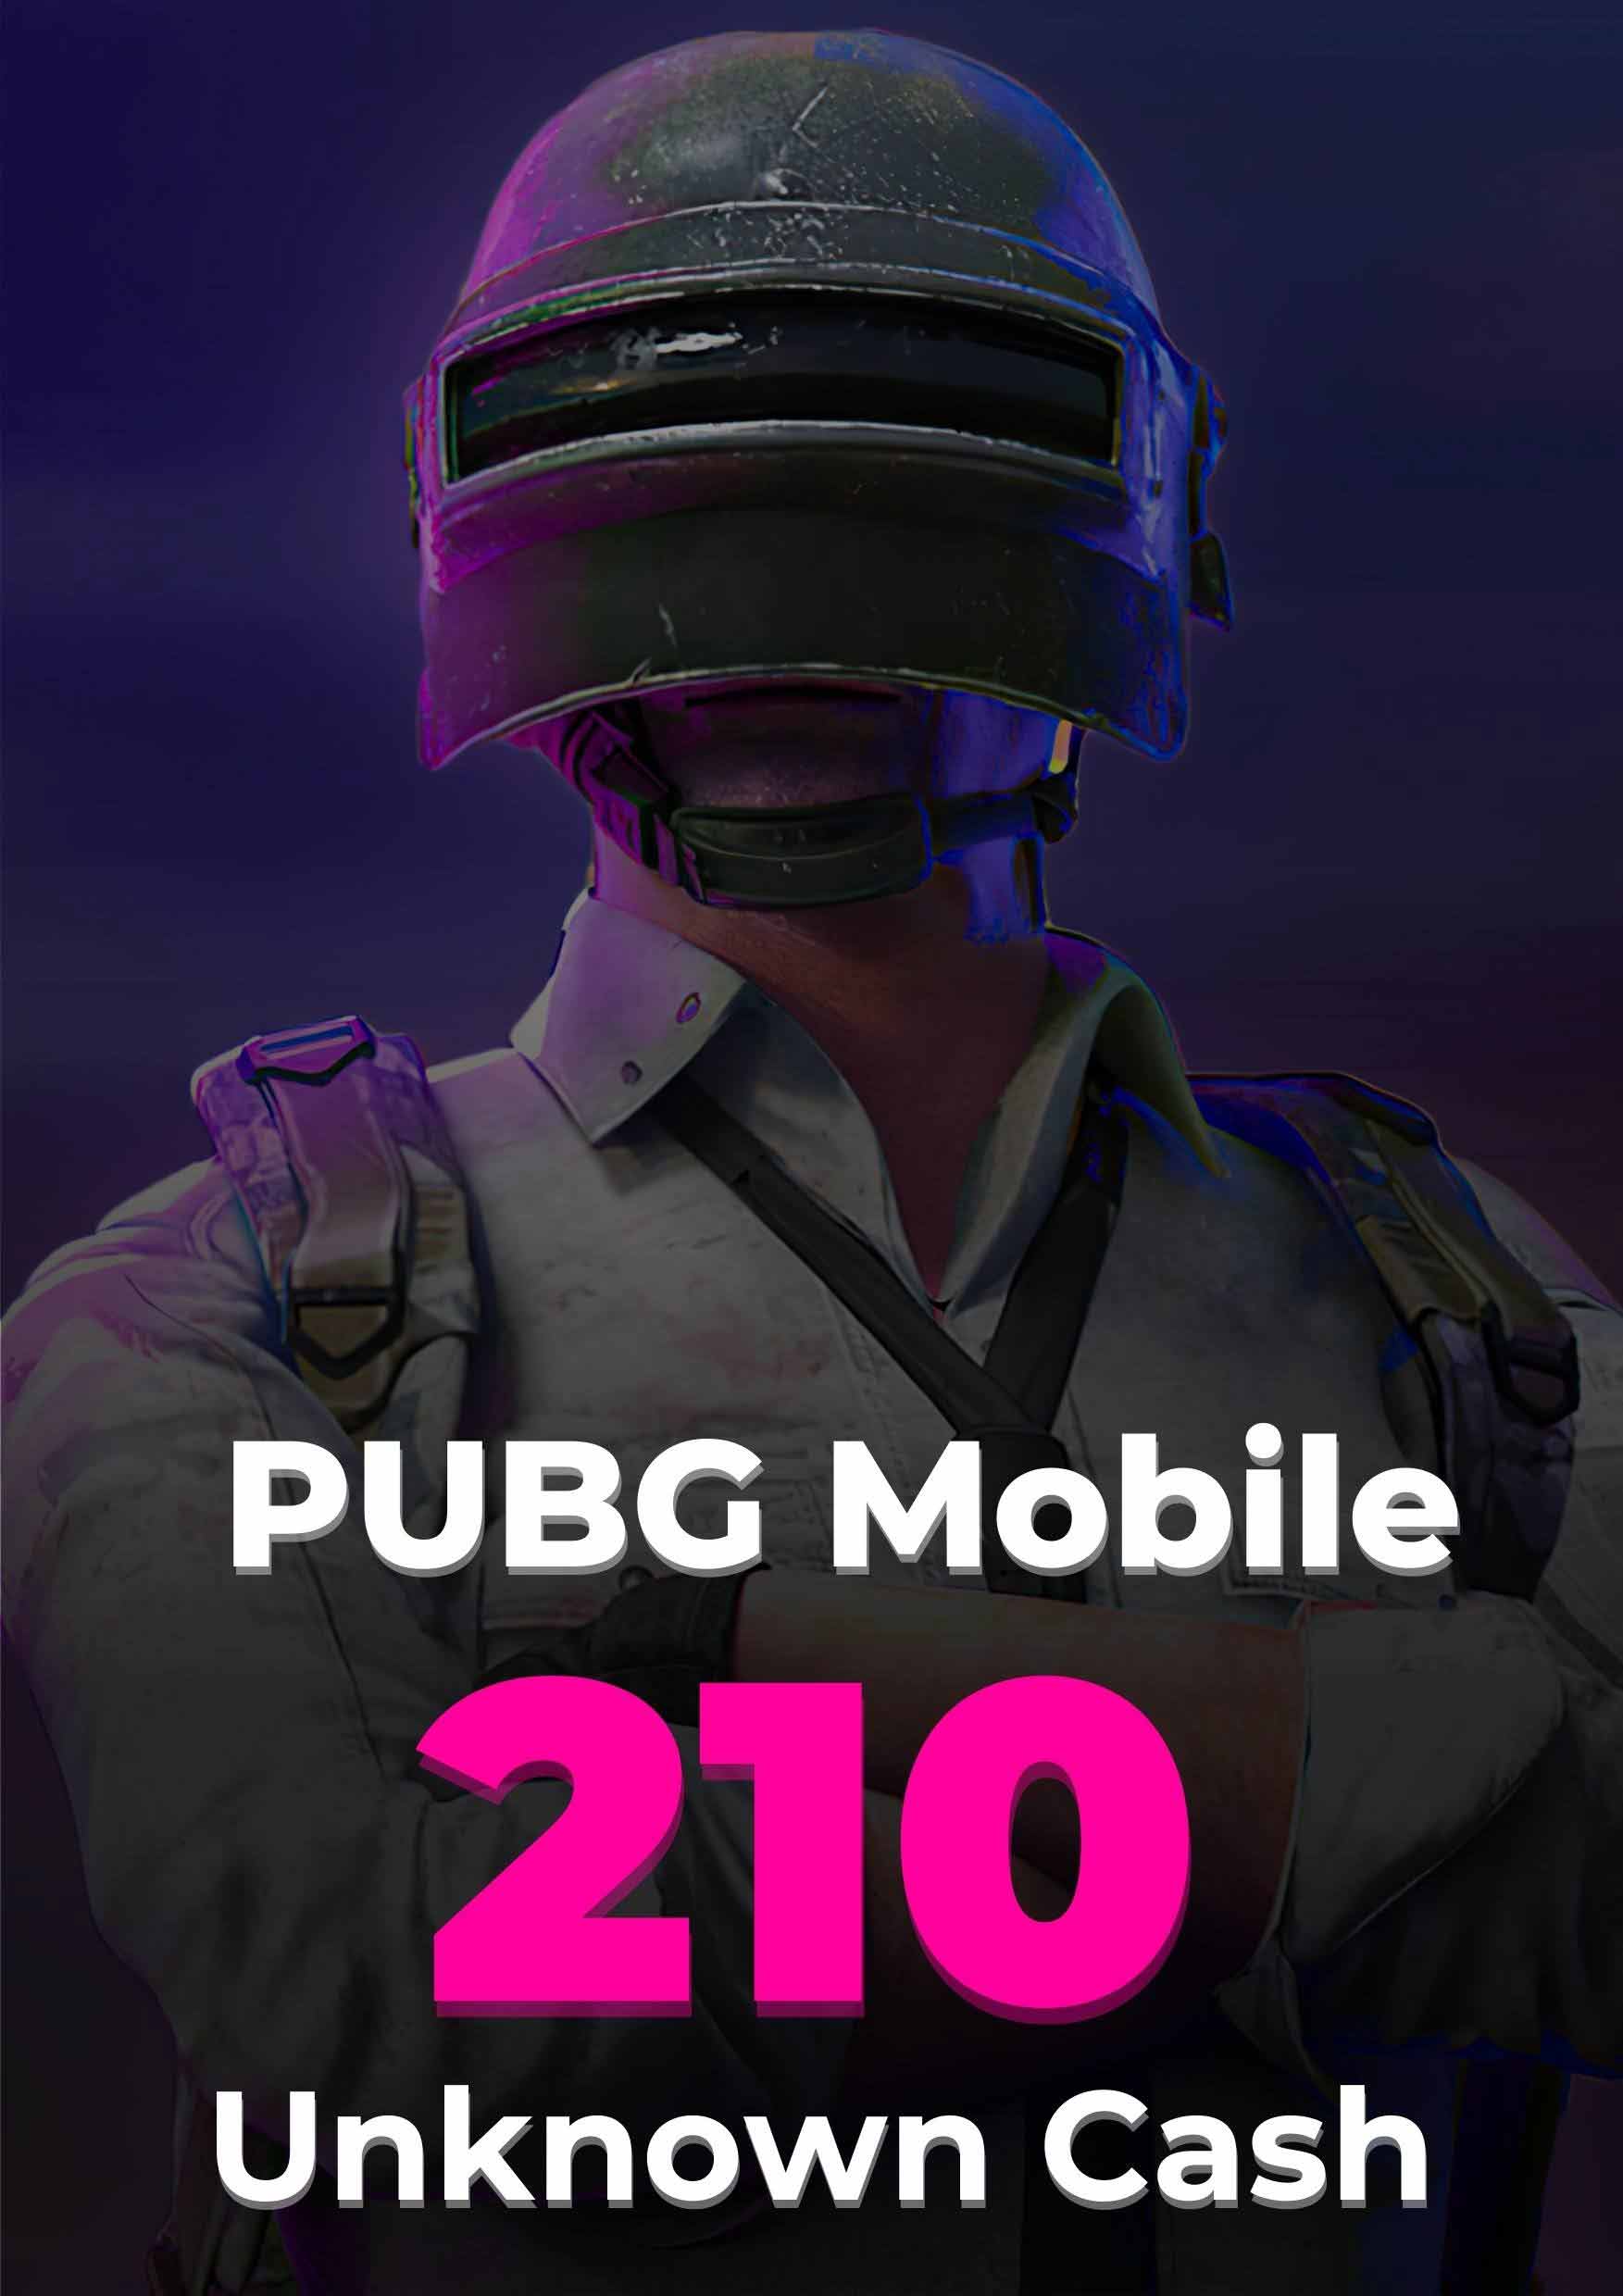 PUBG Mobile 210 UC